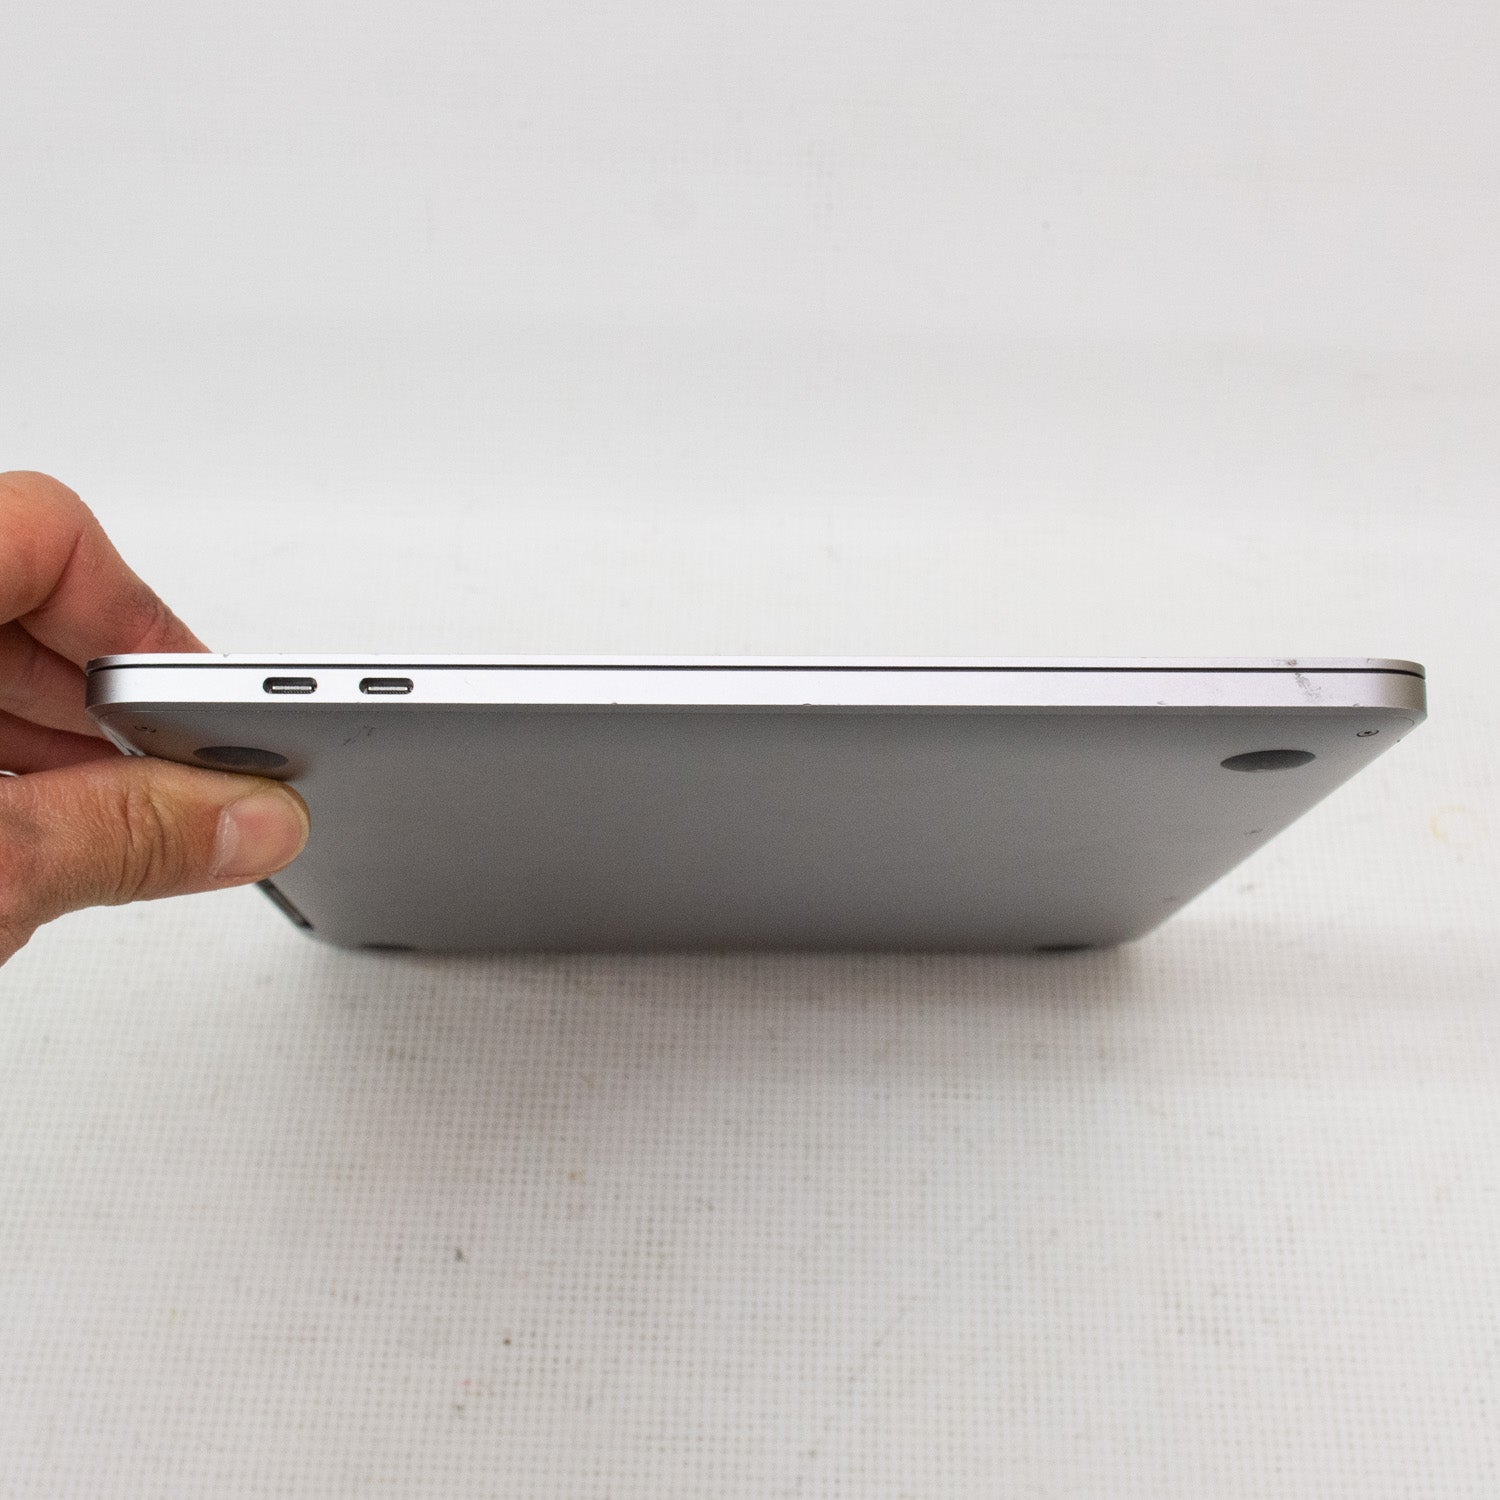 Apple Macbook Pro 2020 A2289 - Intel i5 @ 1.4Ghz, 8GB Ram, 256 GB - Space Gray